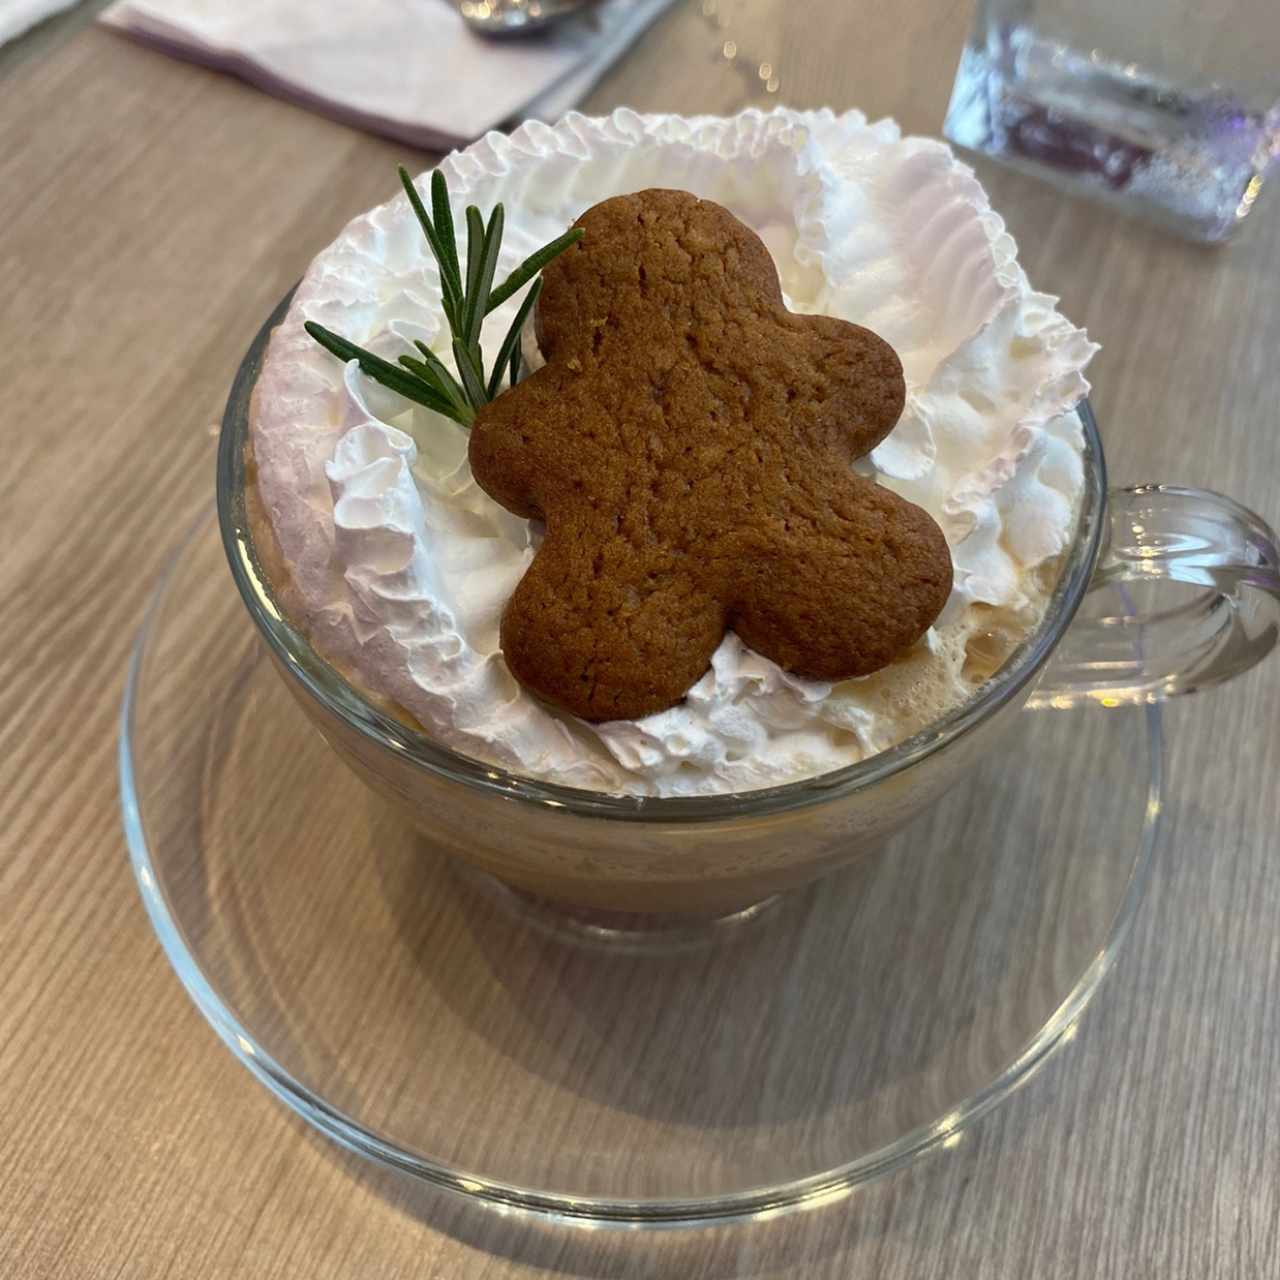 Gingerbread latte